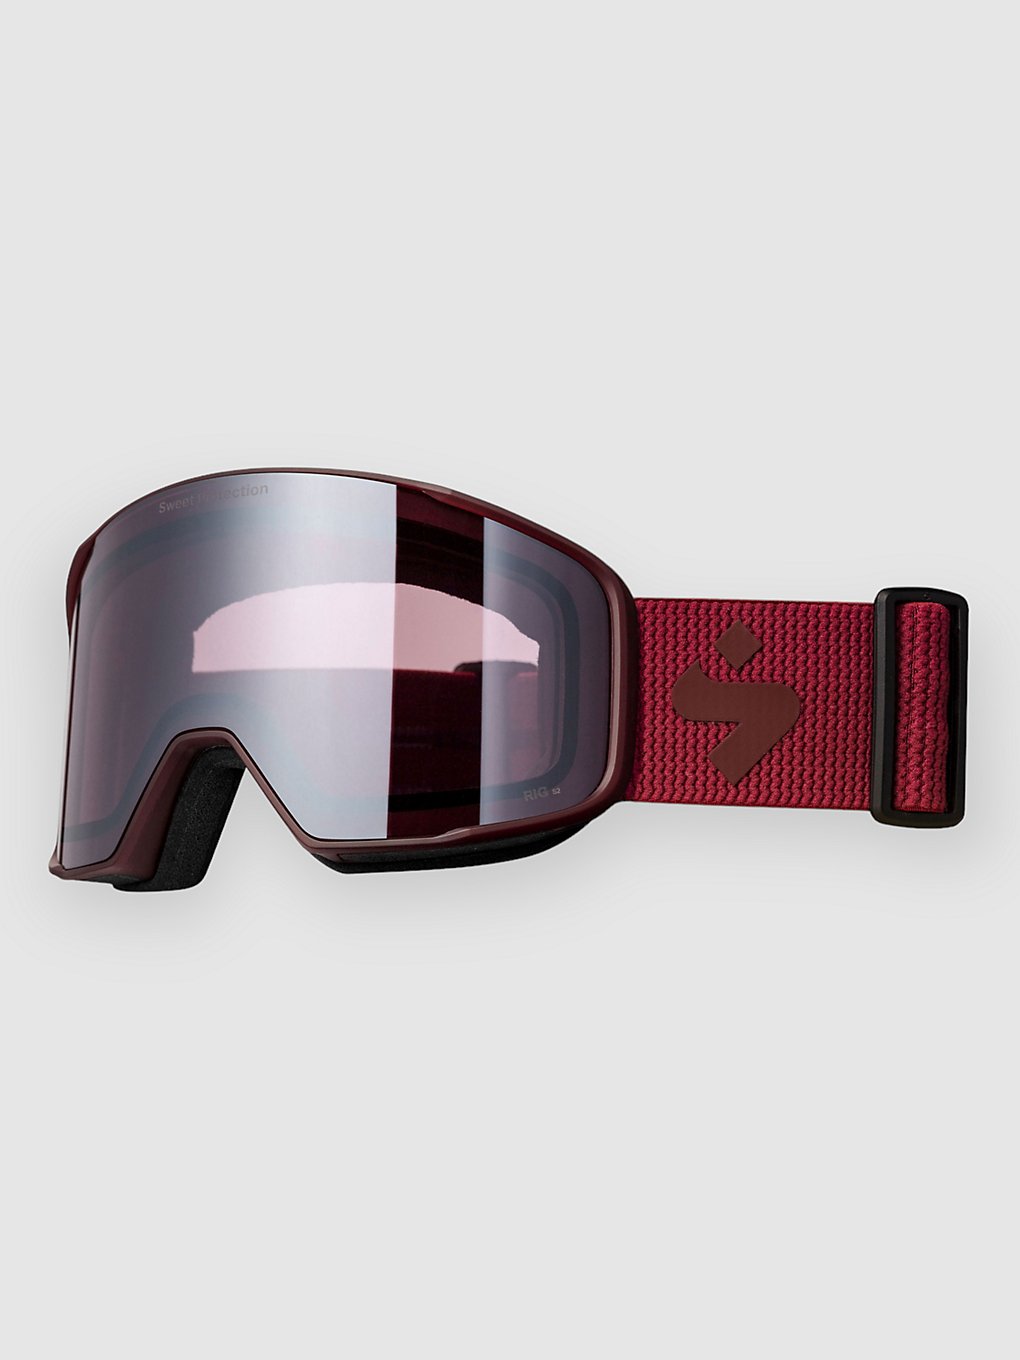 Photos - Ski Goggles Sweet Protection Boondock Rig Reflect Crystal Barbera Gog 